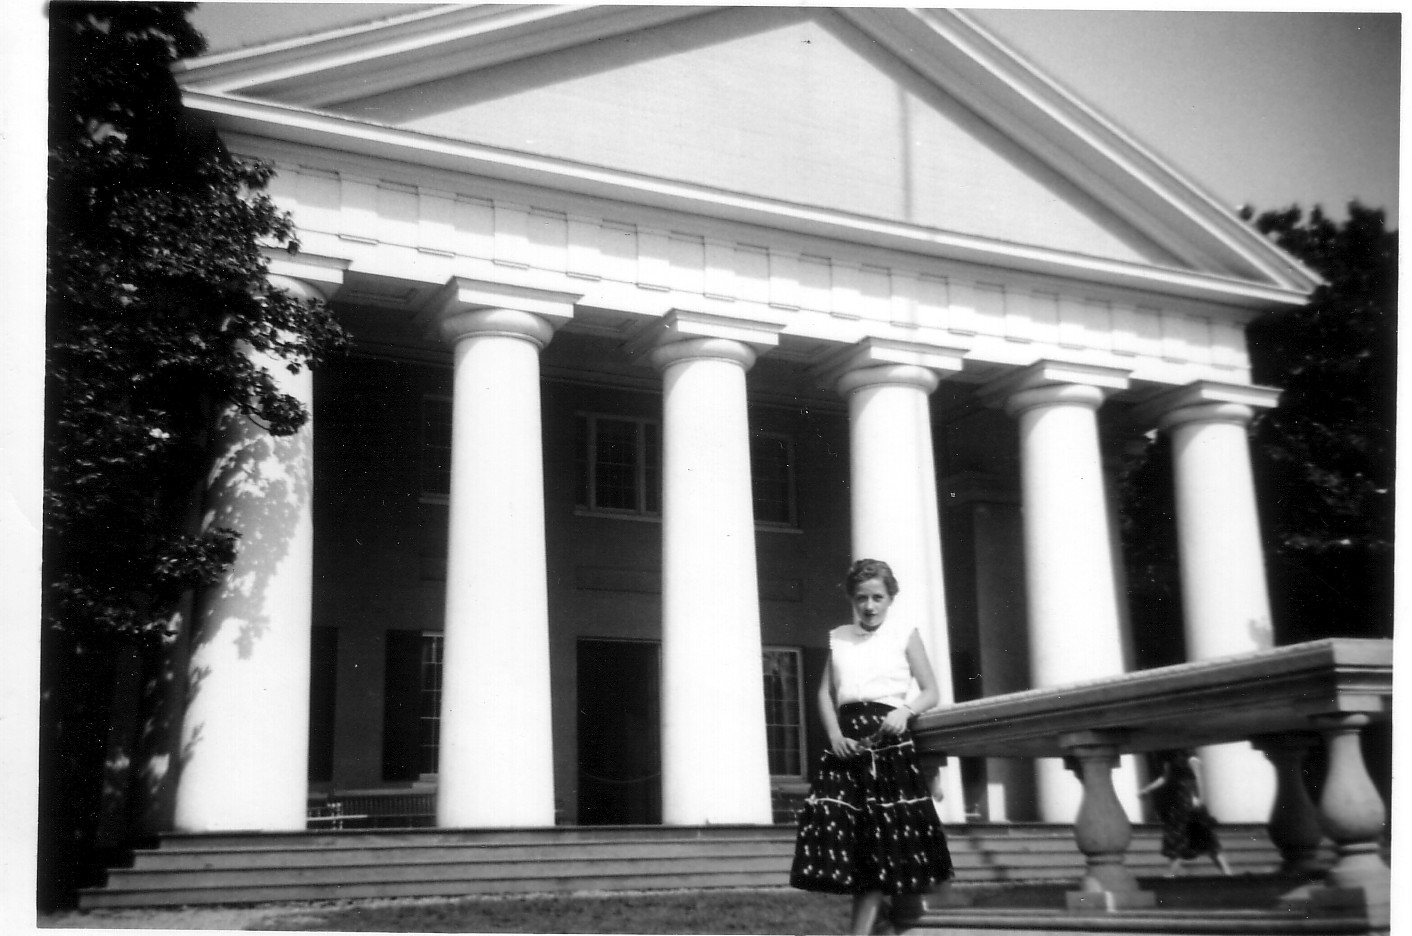 ARLENE CLENDENEN STANDING IN FRONT OF A WASHINGTON DC BUILDING.